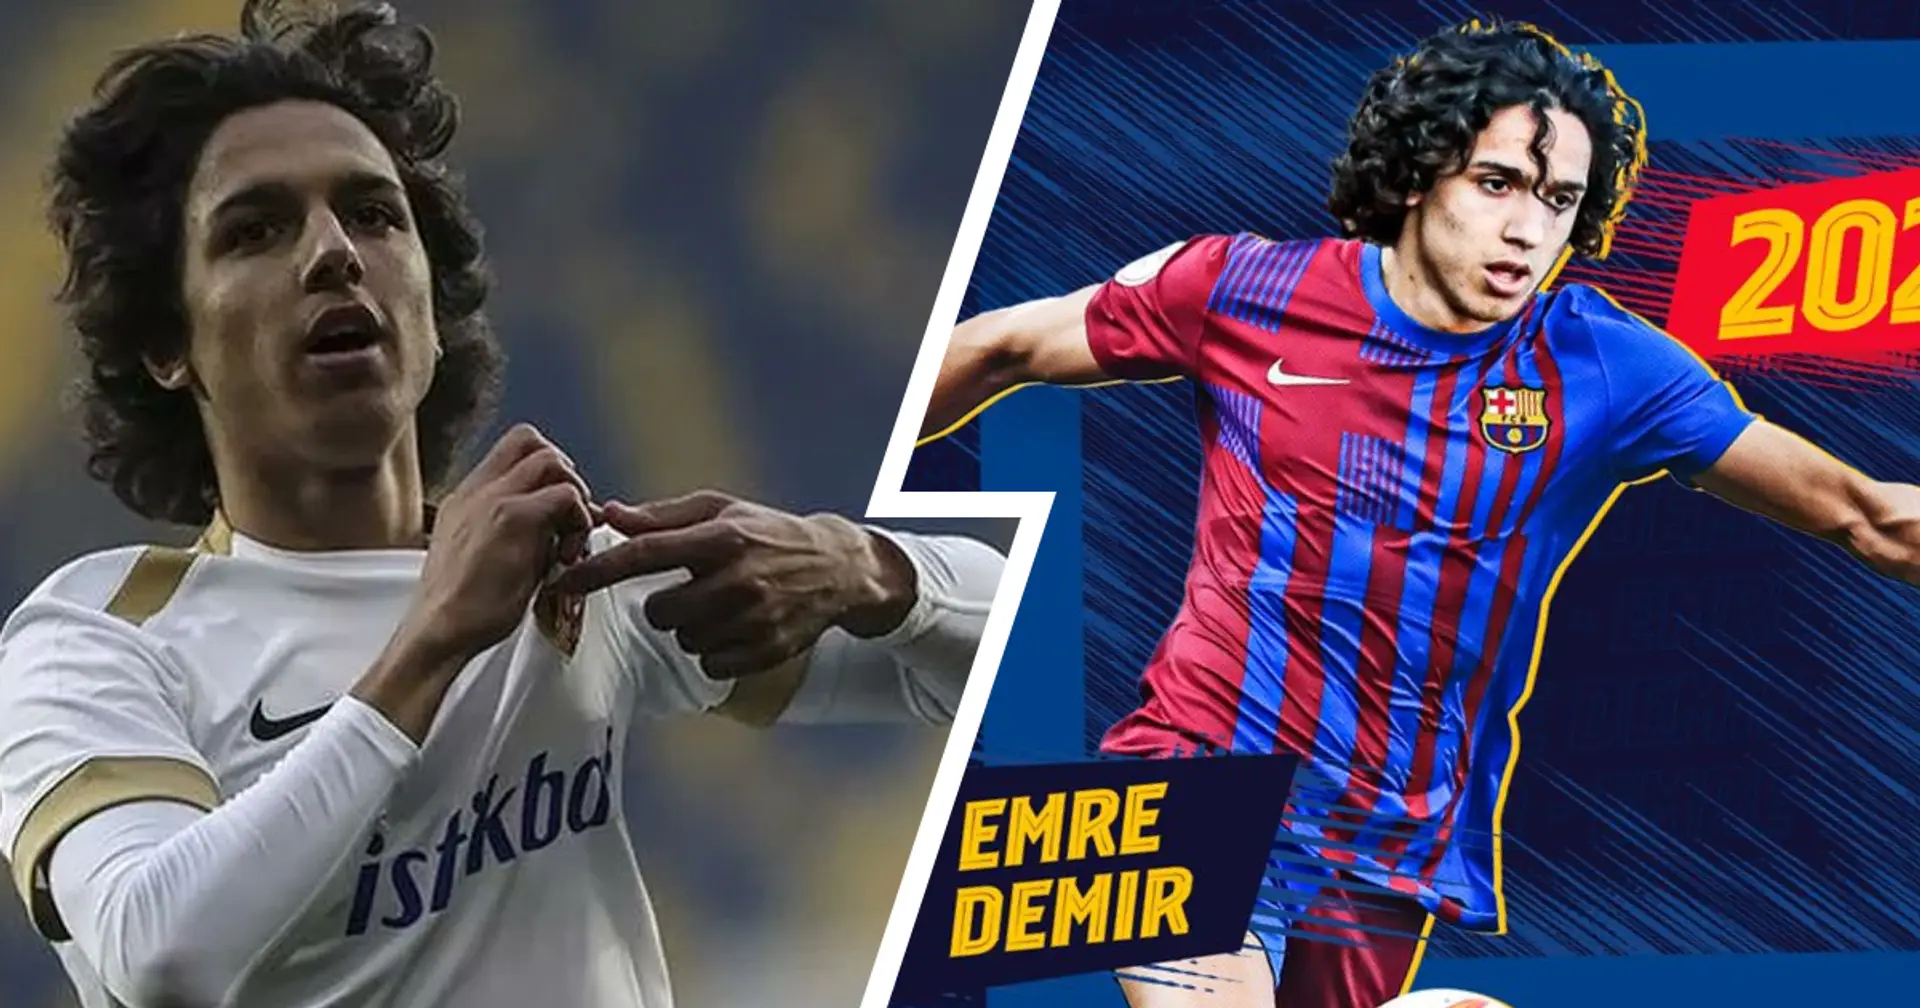 OFFICIAL: Barcelona announce the signing of teenage sensation Emre Demir